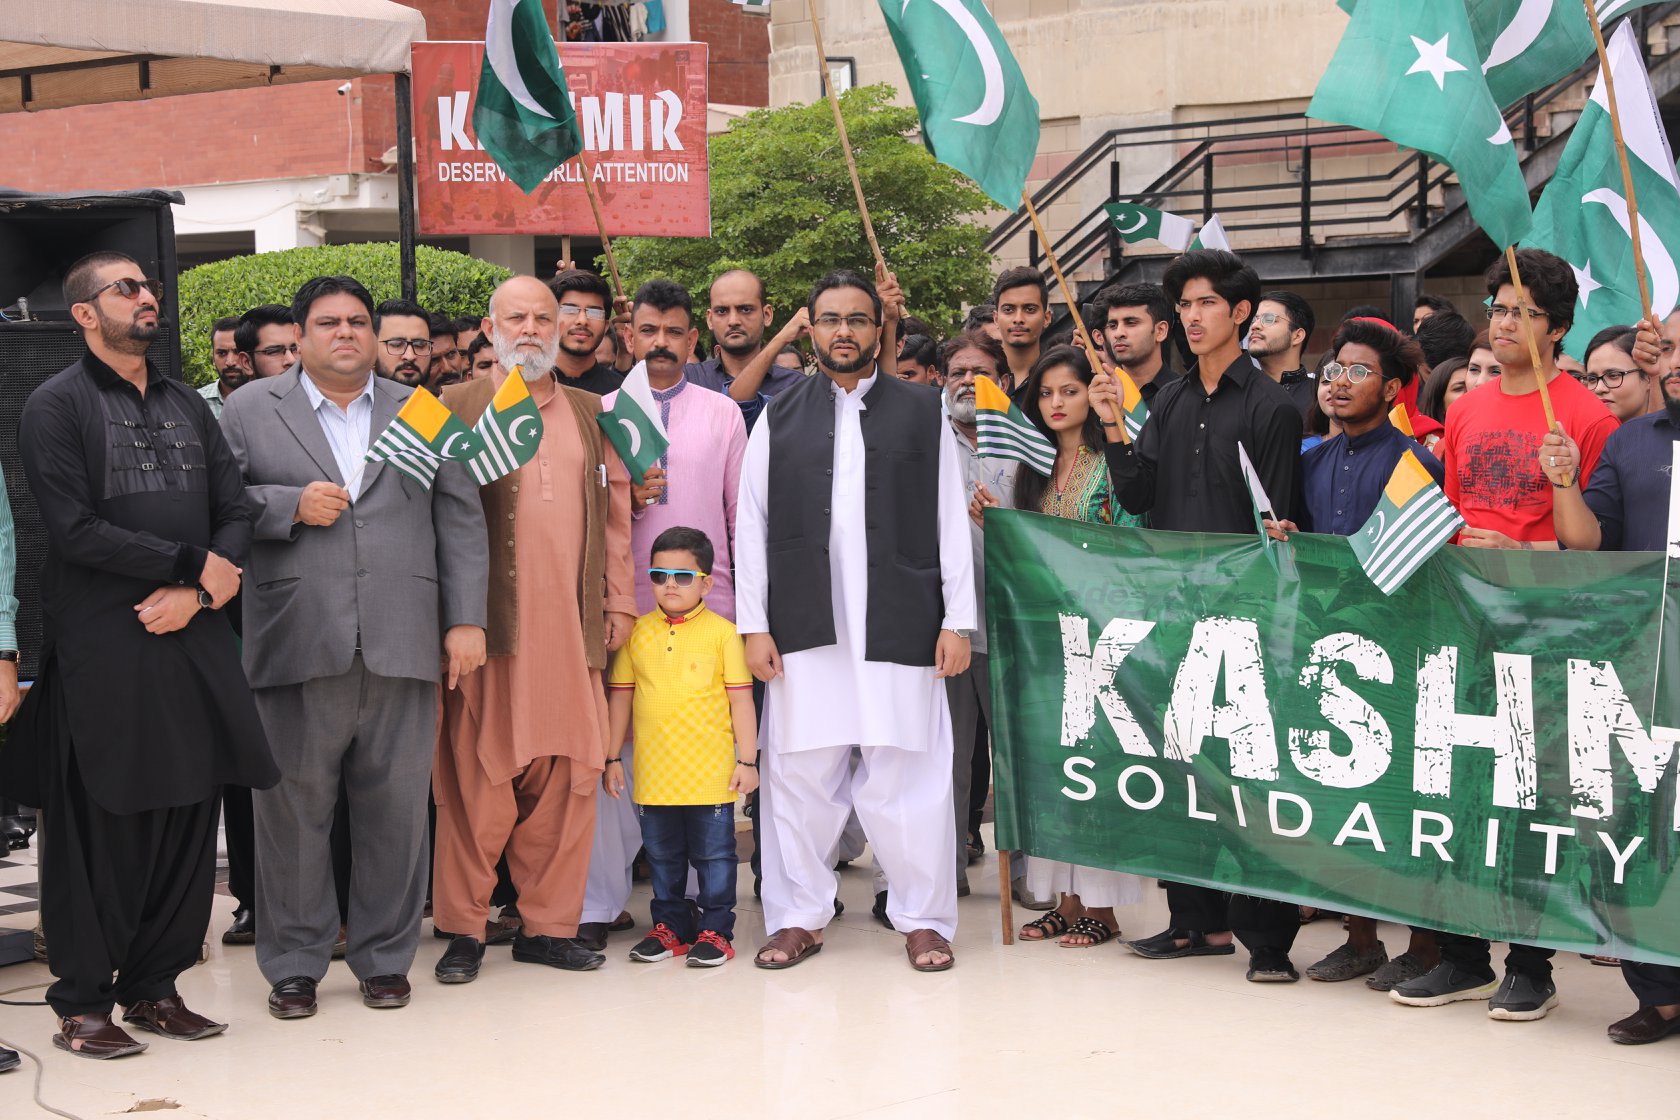 Prof. Dr. Ali Raza Organized Kashmir Solidarity Rally to raise awareness and voice solidarity.